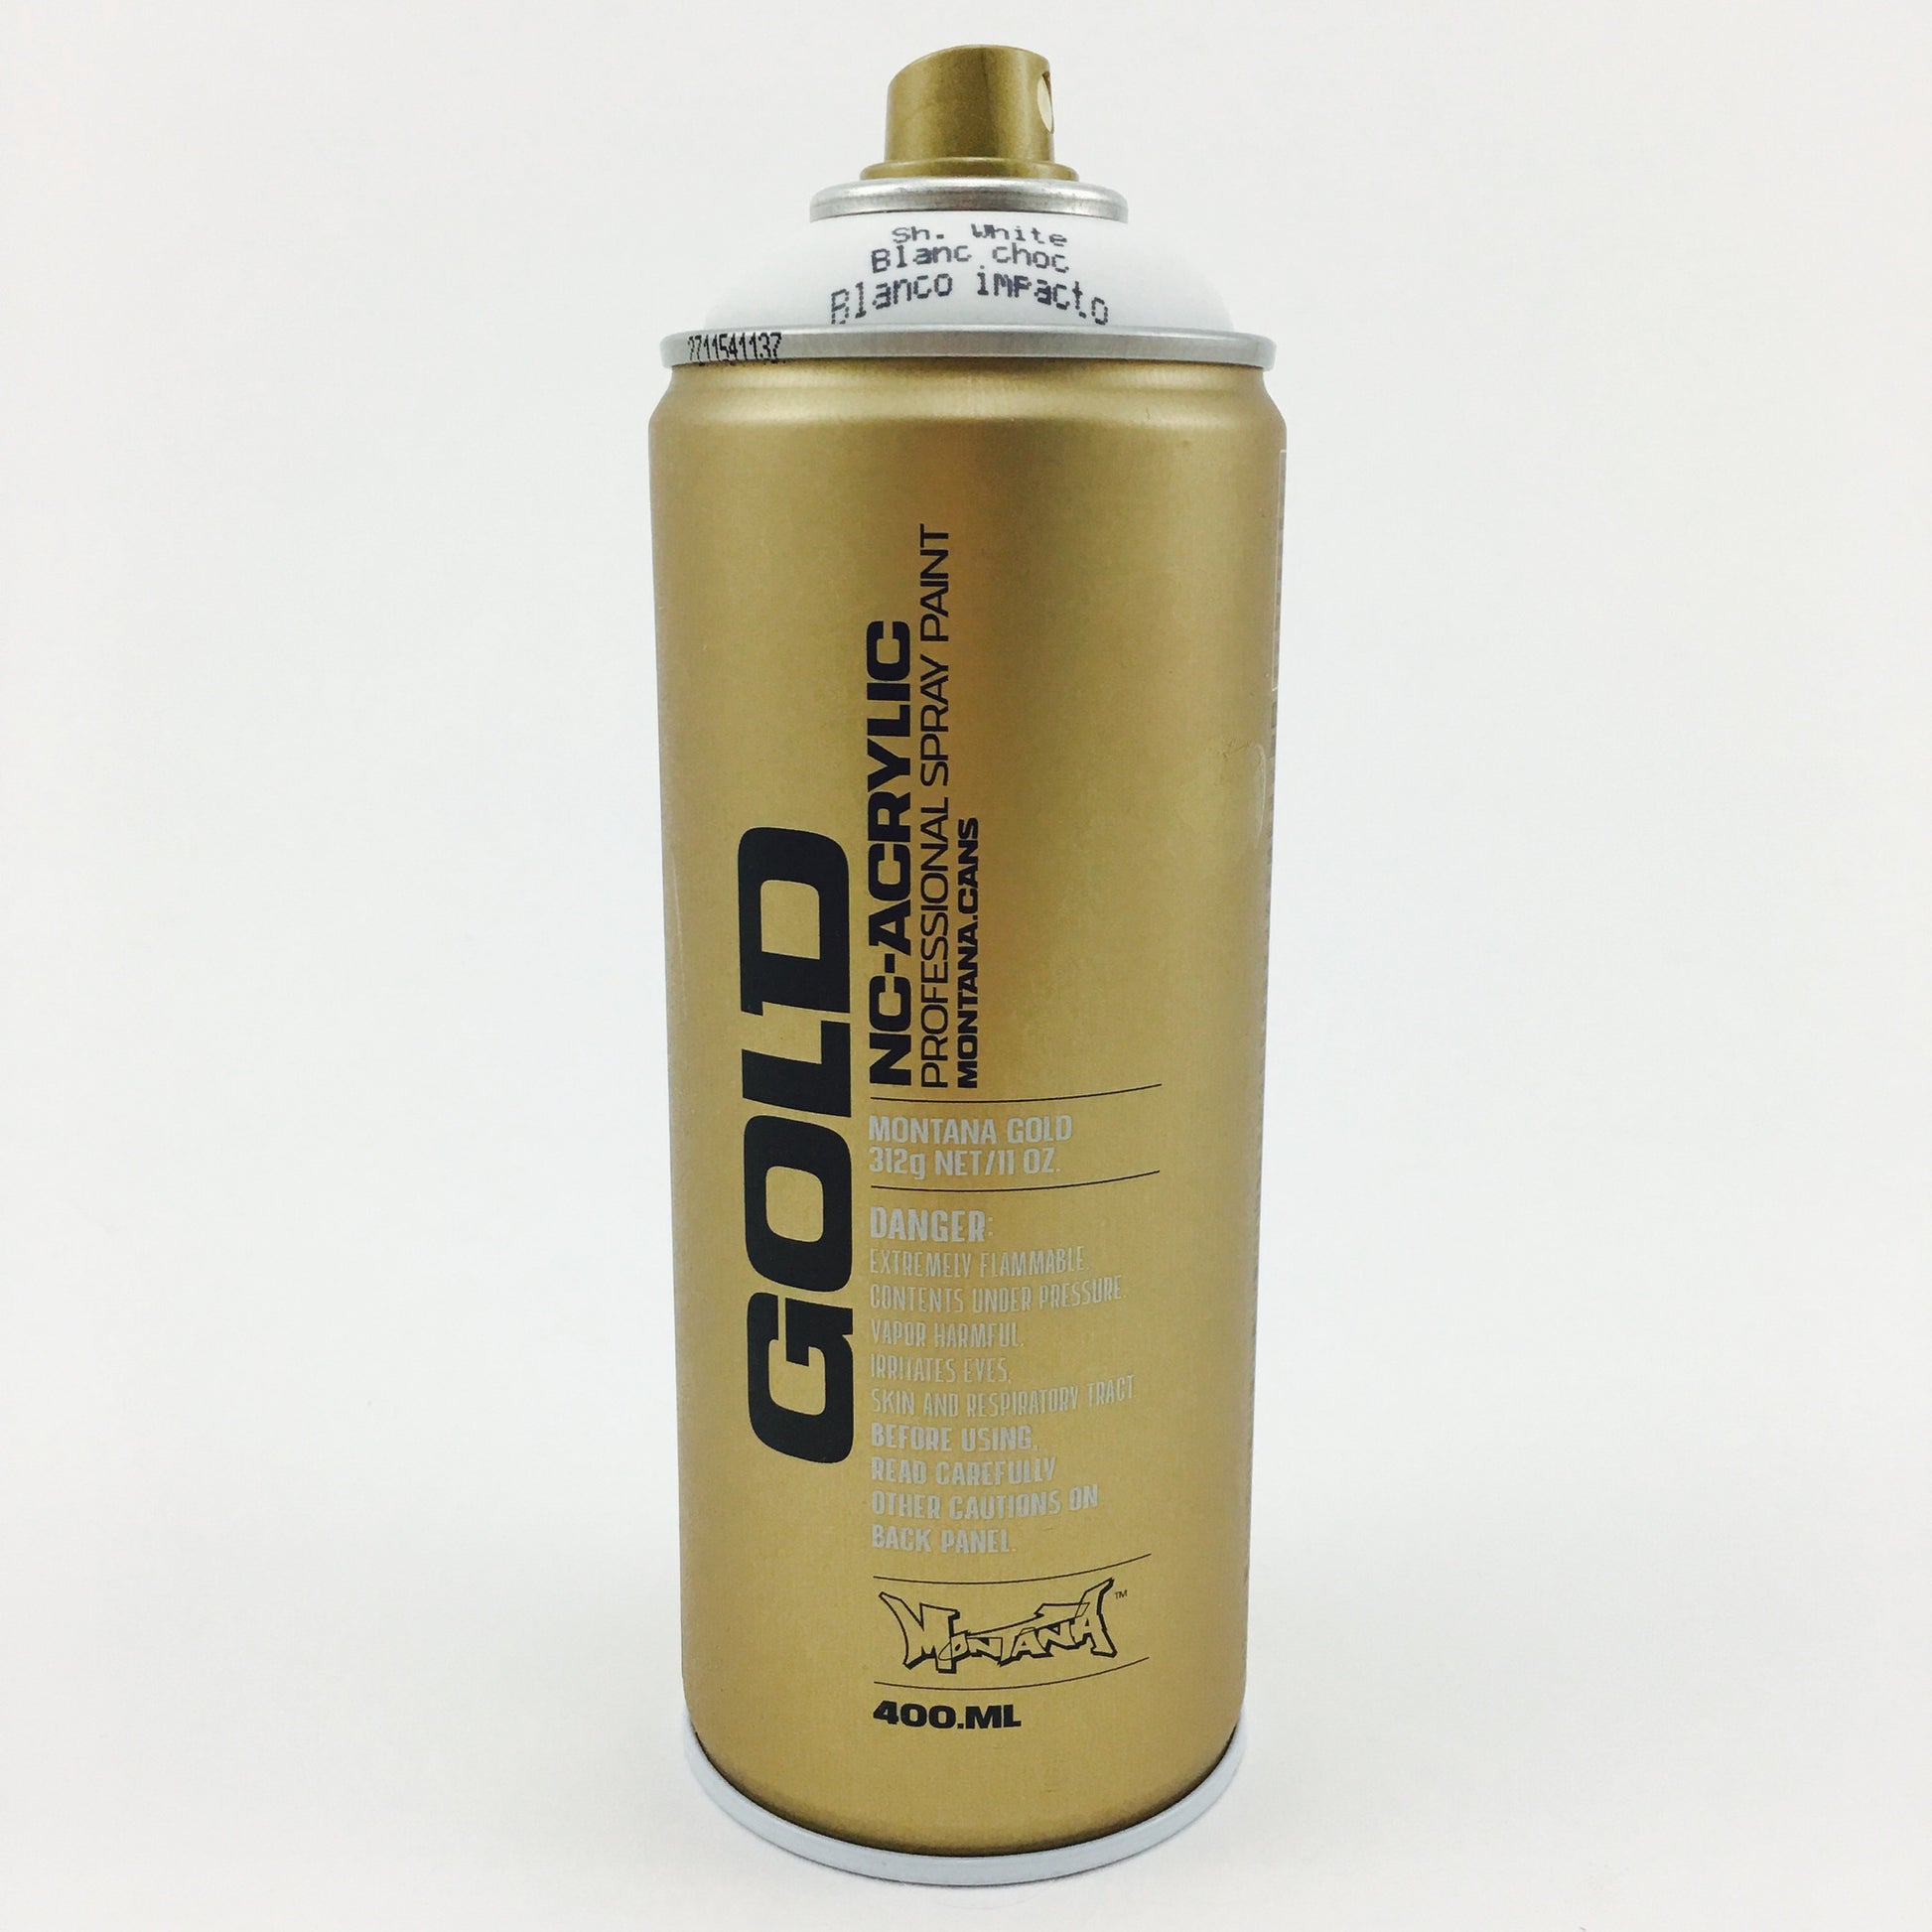 Velvet Spray 400 ml - BLANC